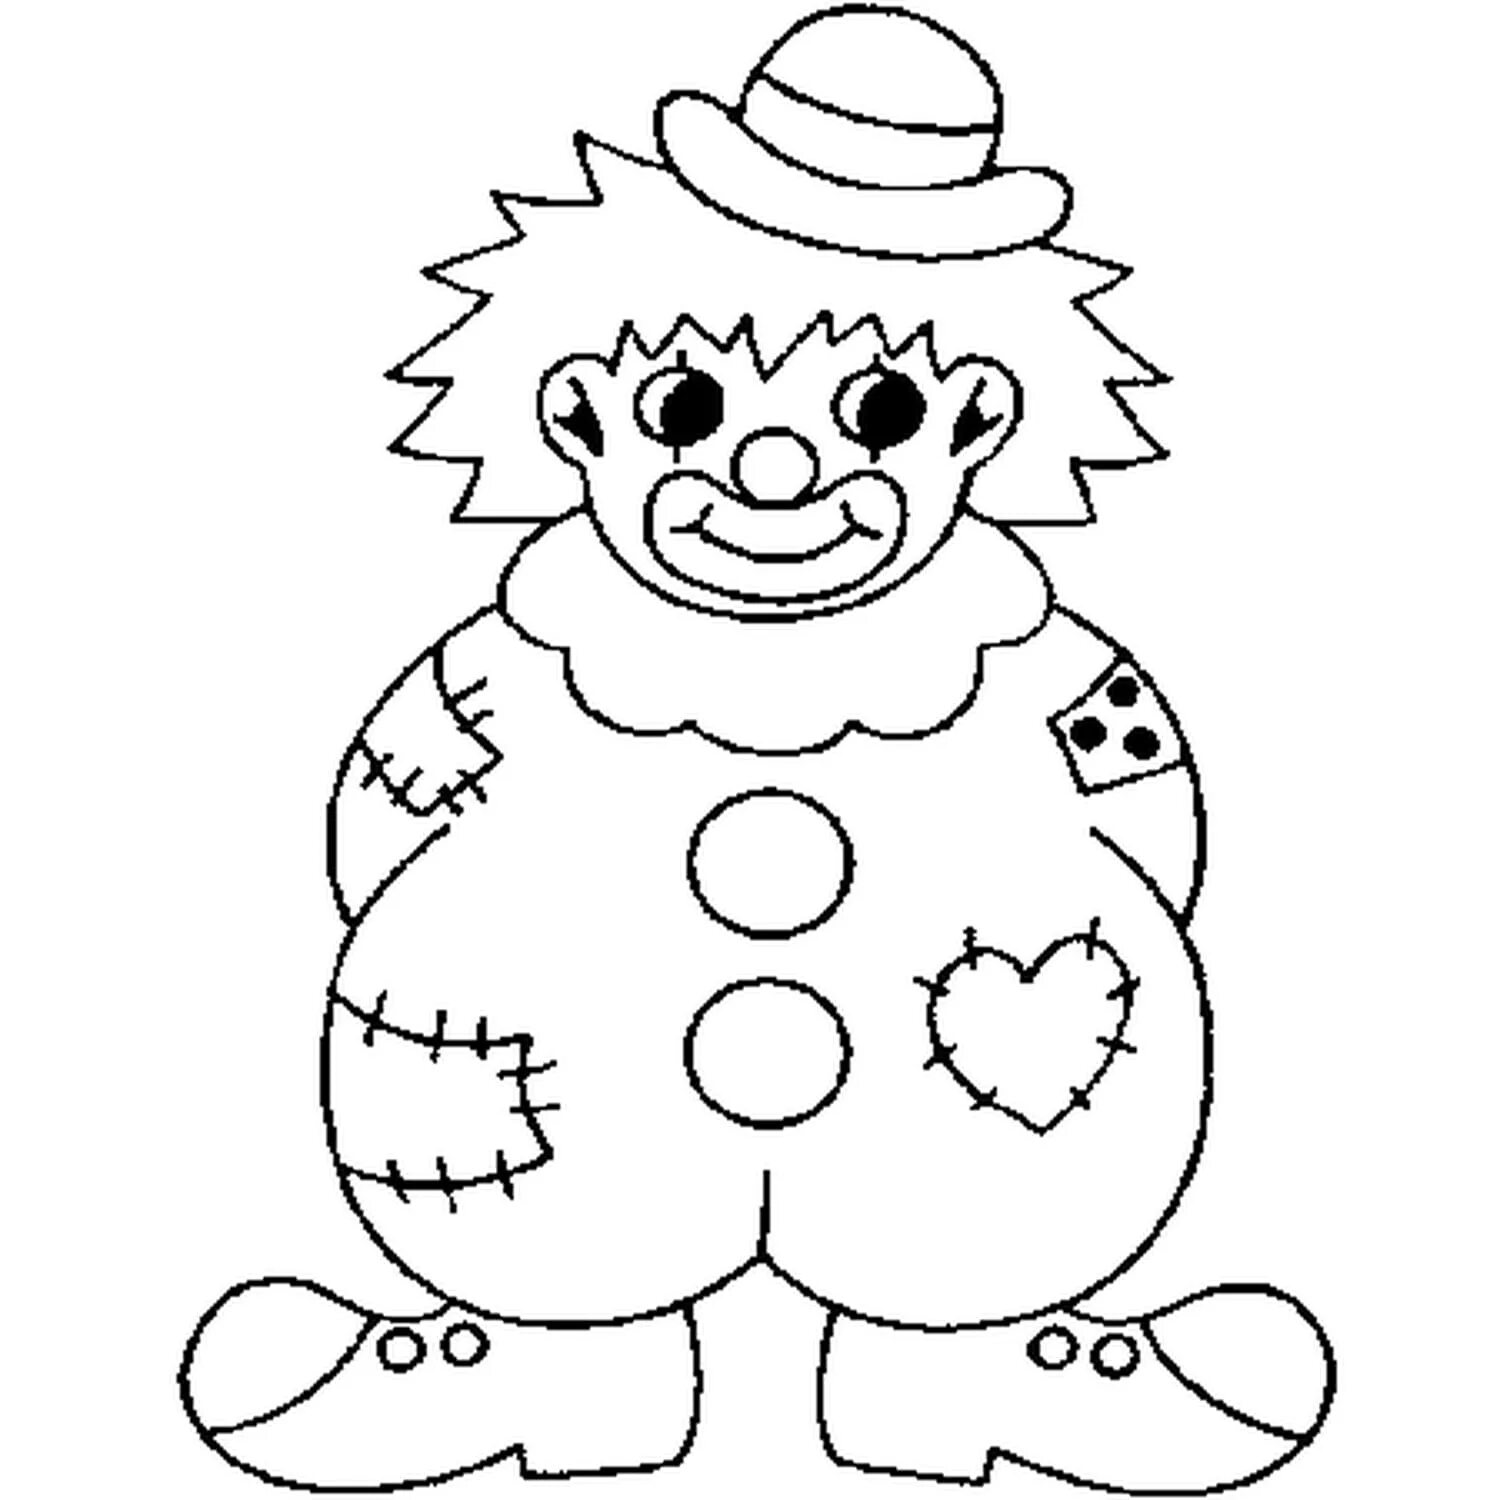 Клоун раскраска для детей 4 5. Клоун раскраска. Клоун раскраска для малышей. Клоун раскраска для детей. Раскраска весёлый клоун для детей.